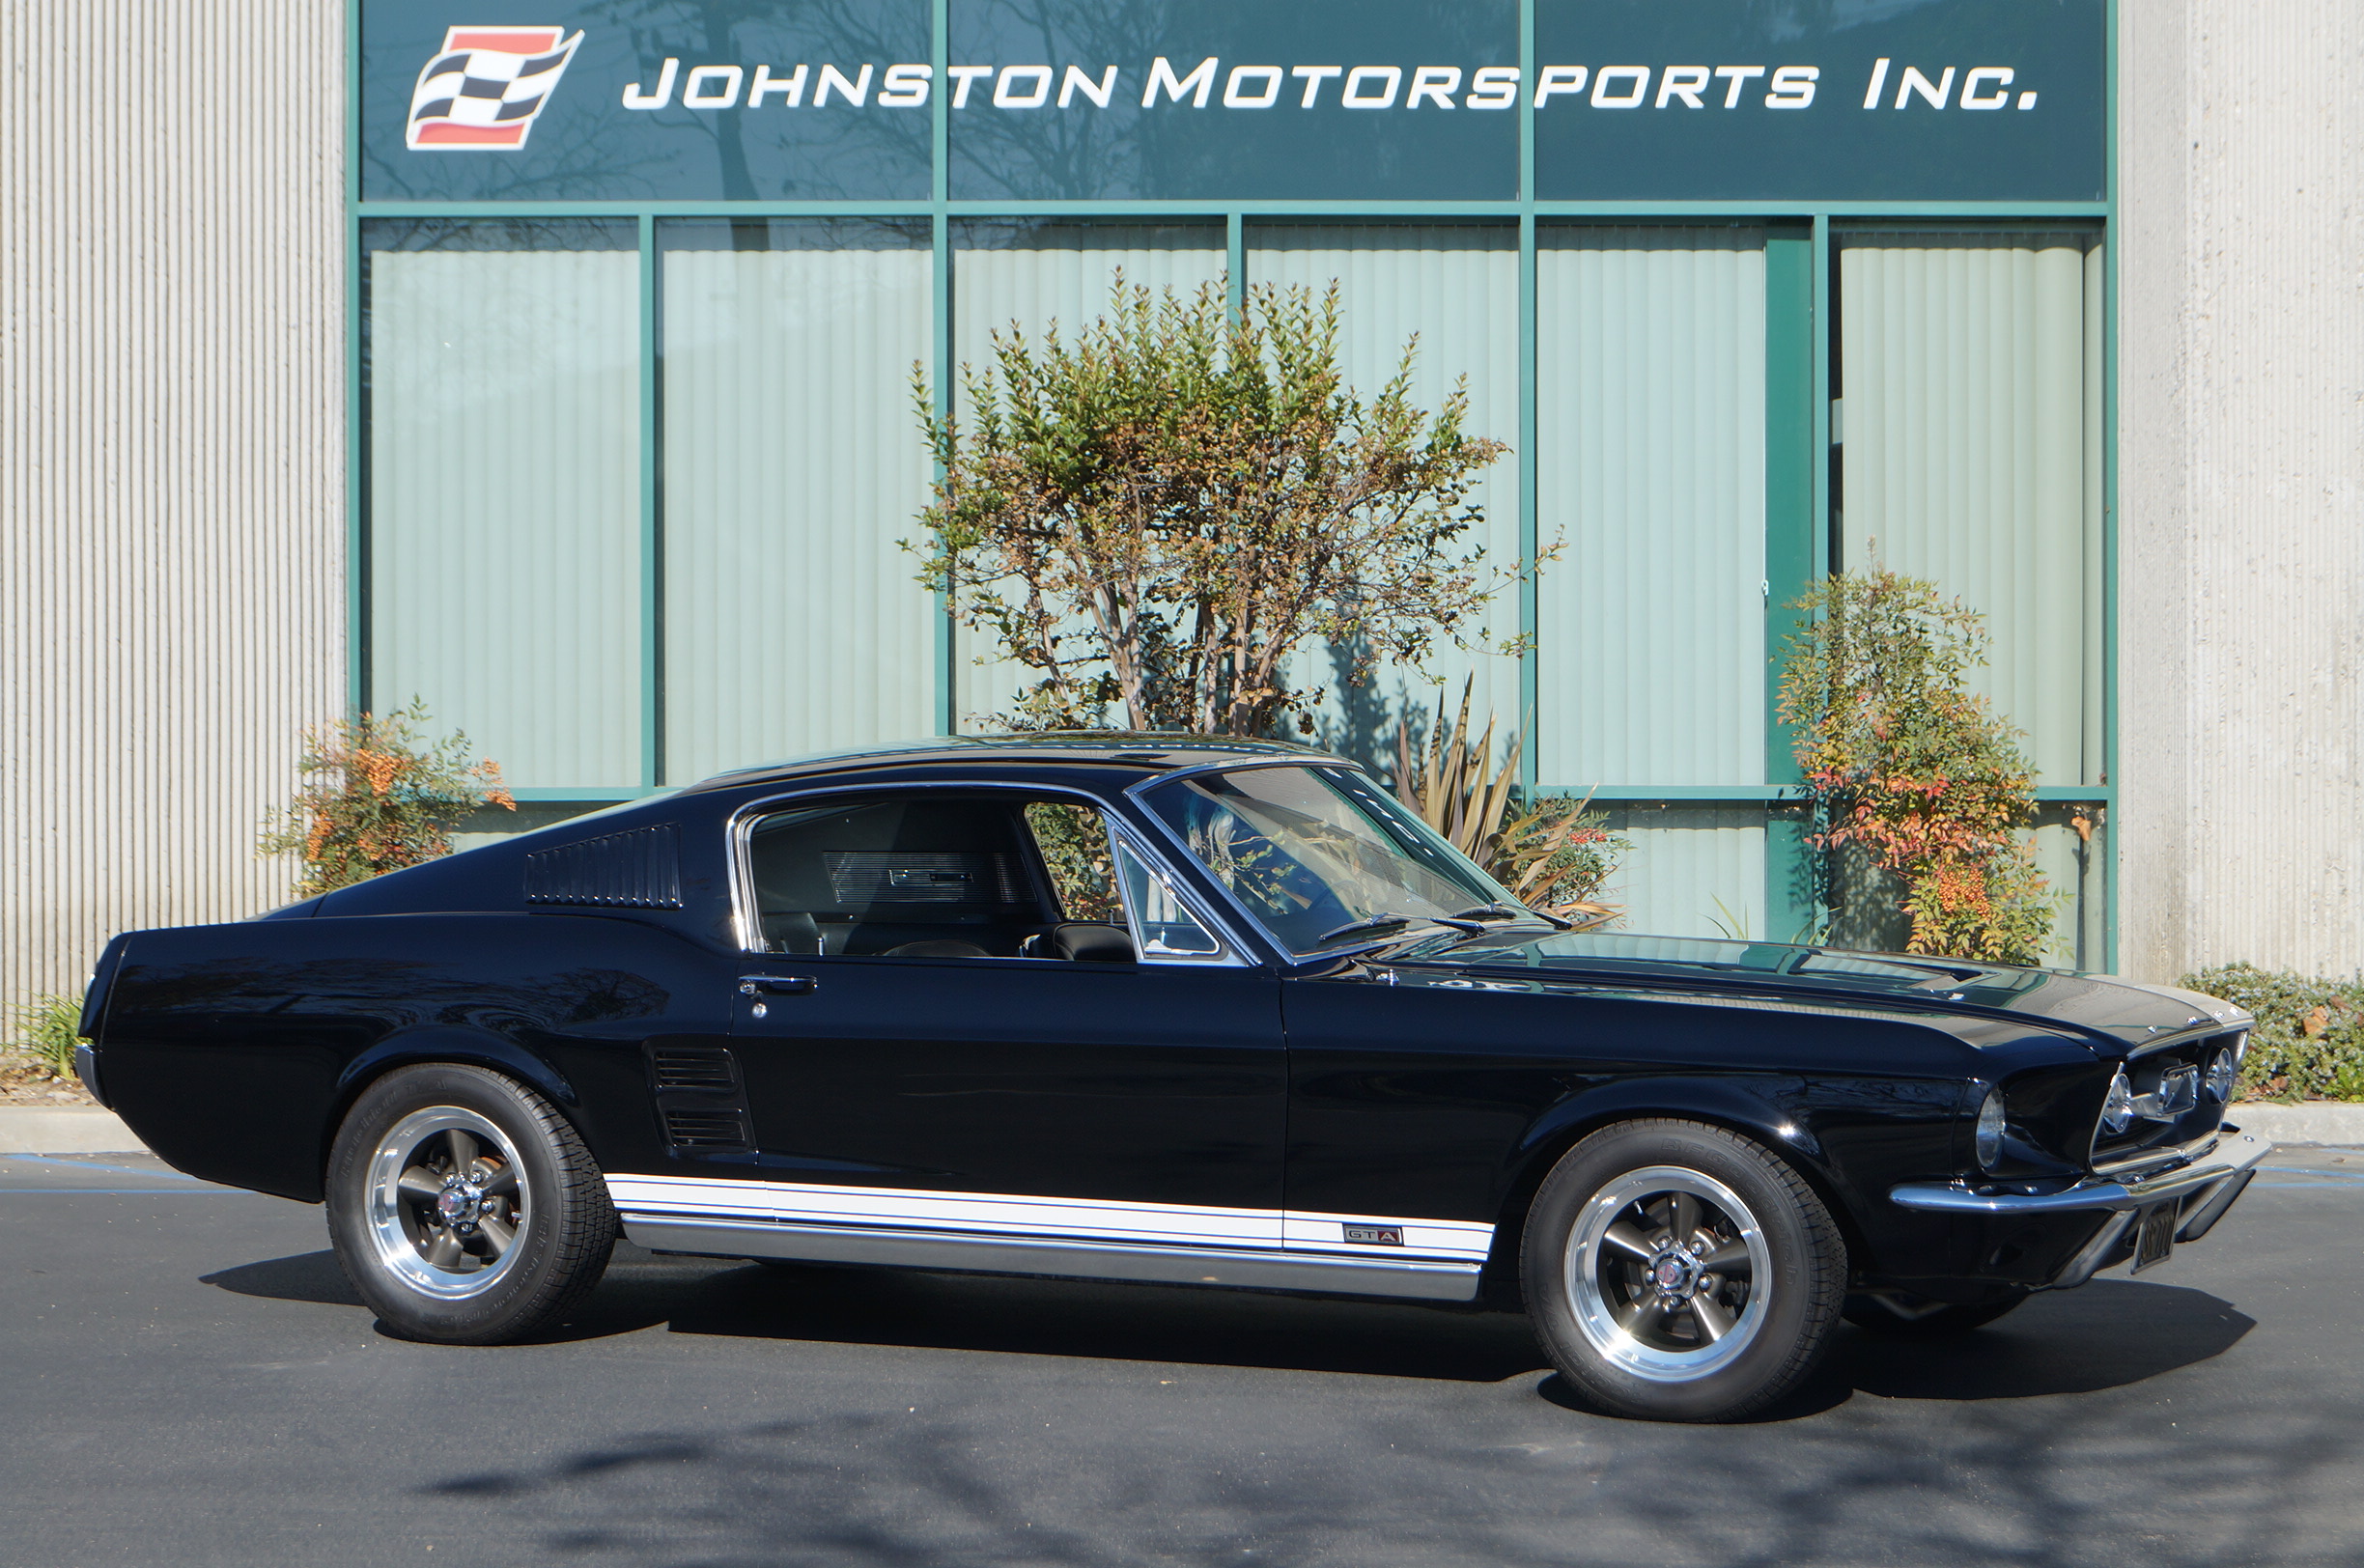 Black 1967 Ford Mustang GTA Fastback - Sold at Johnston Motorsports